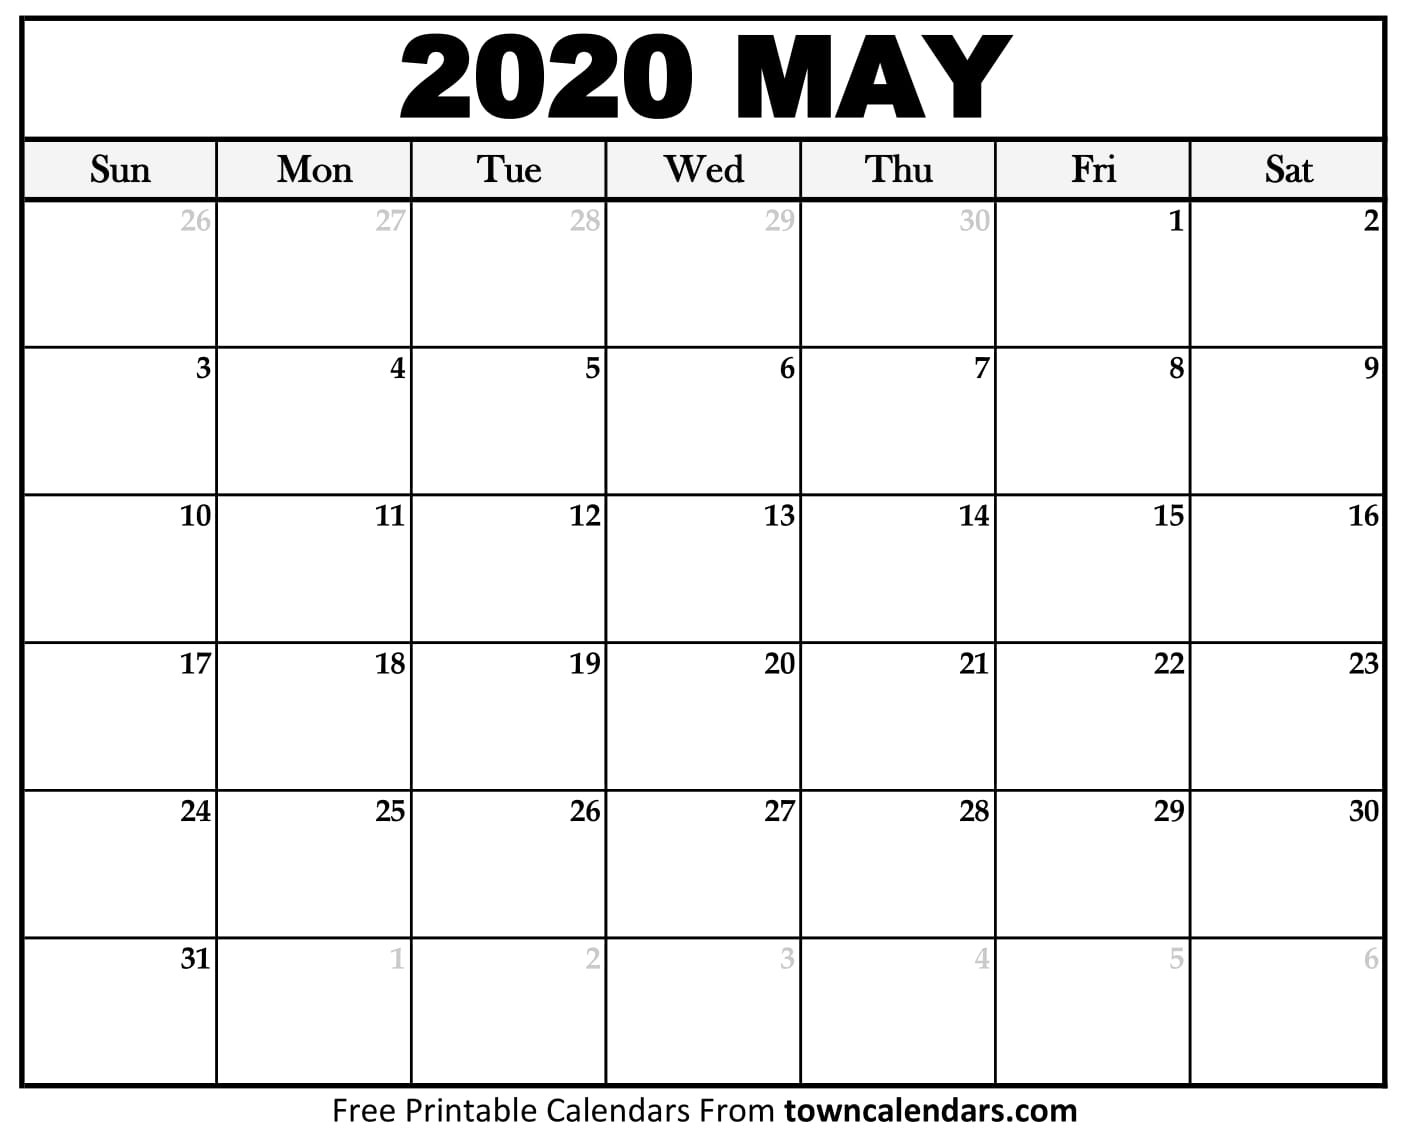 Printable May 2020 Calendar - Towncalendars  May 2020 Calendar